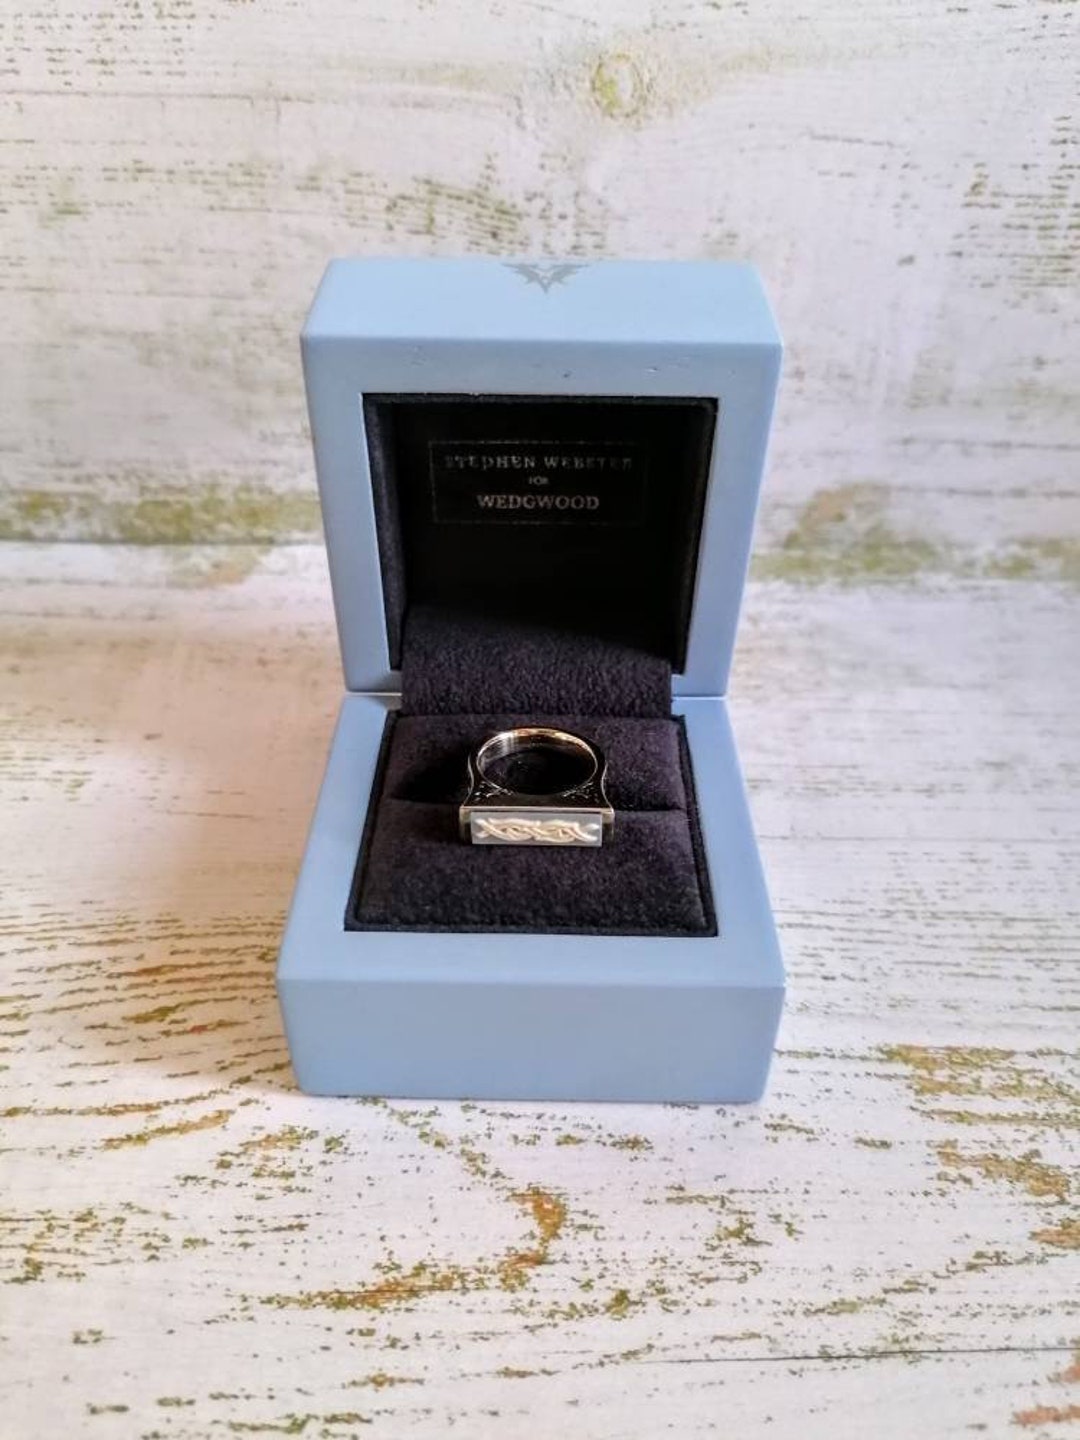 Stephen Webster Thorn for Wedgwood Light Blue Ring Jasperware Cameo  Sterling Silver HM 2004, Optional Original Gift Box Small Fit Modernist -  Etsy